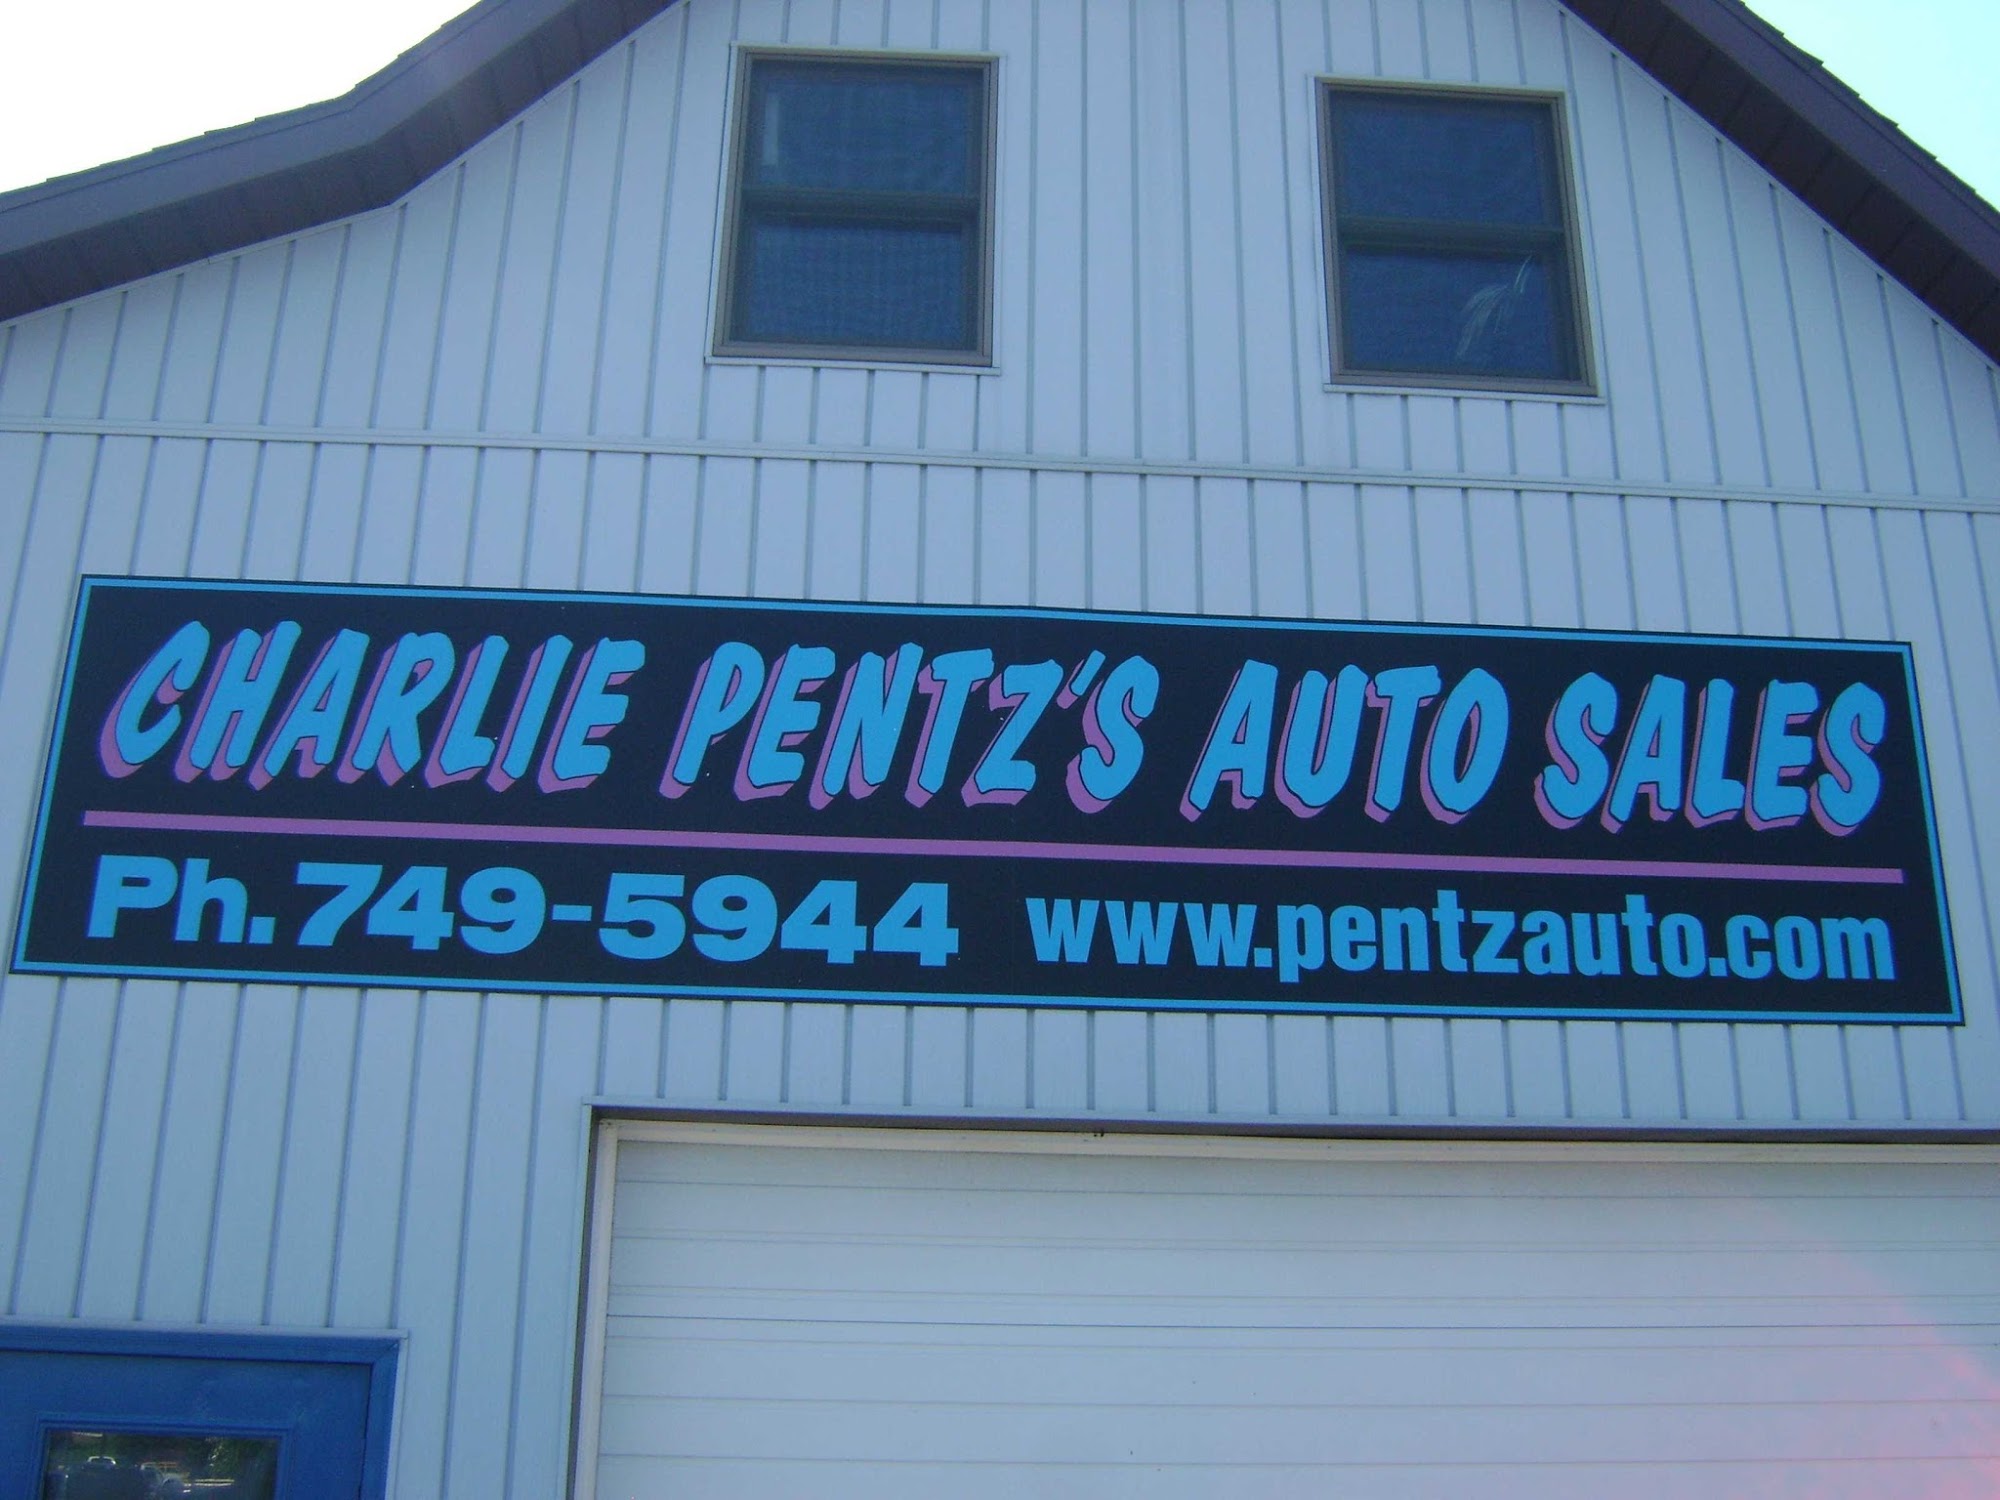 Charlie Pentz's Auto Sales